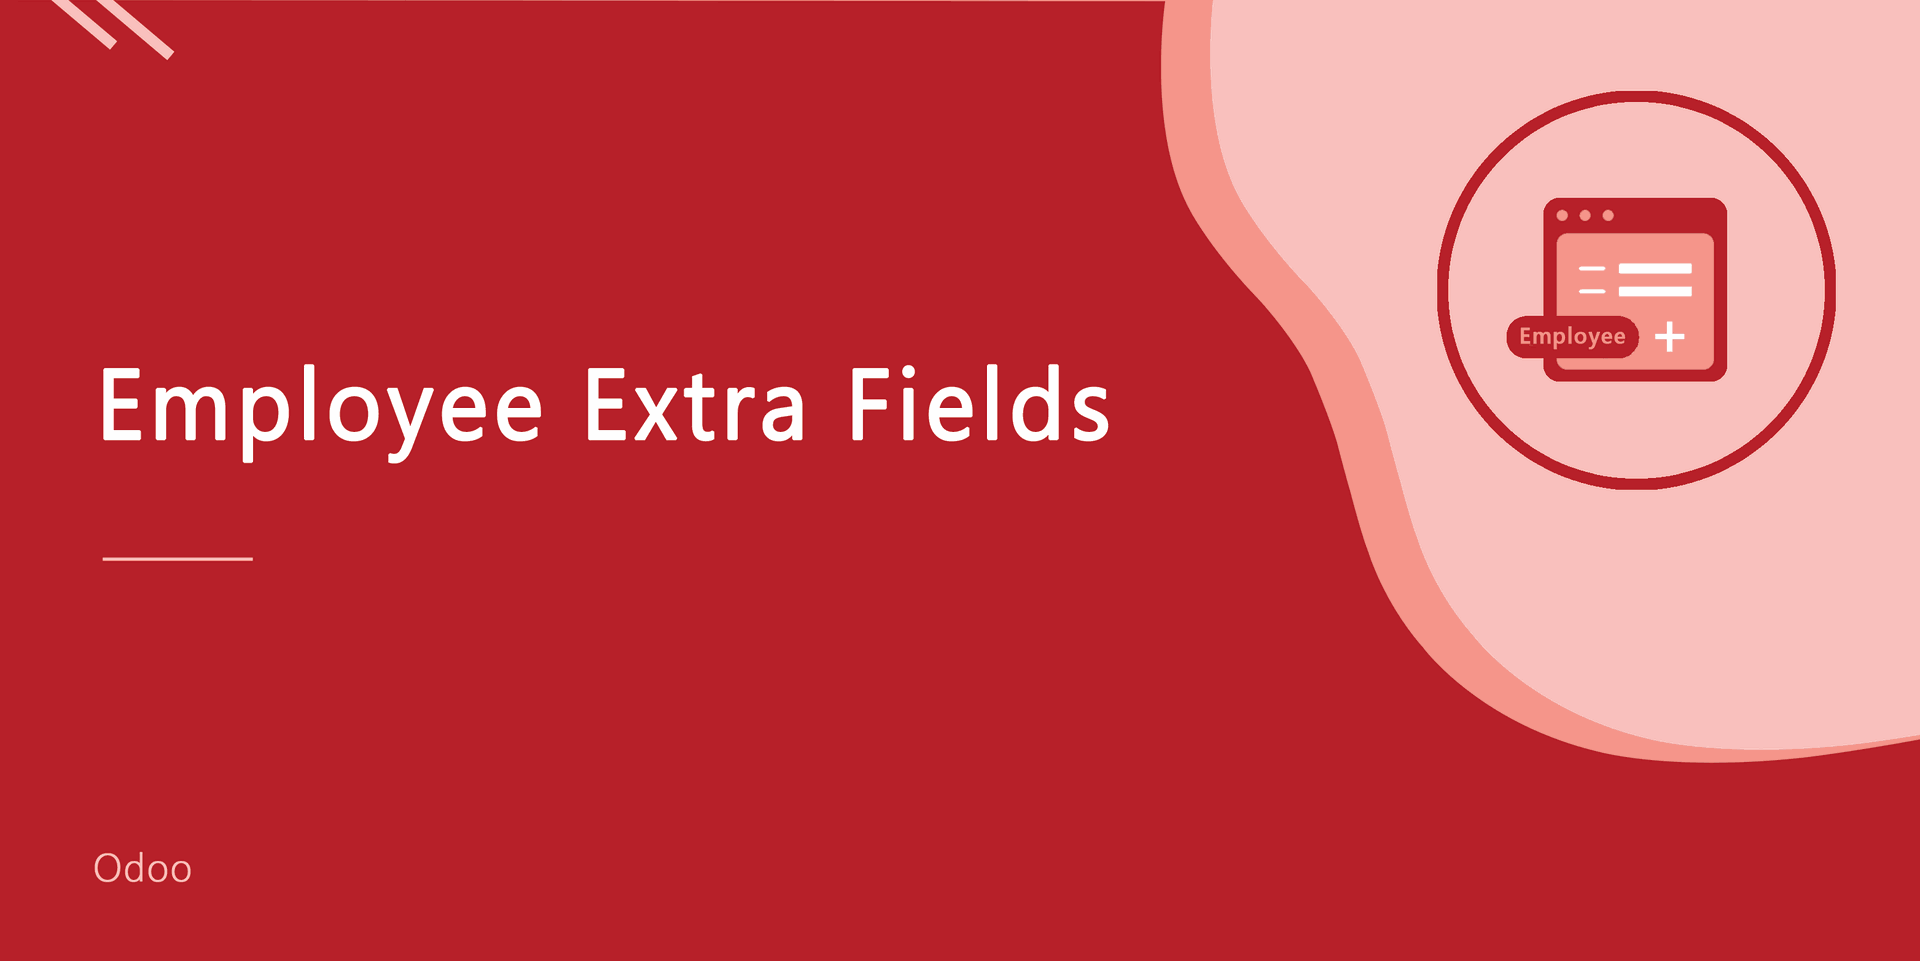 Employee Extra Fields